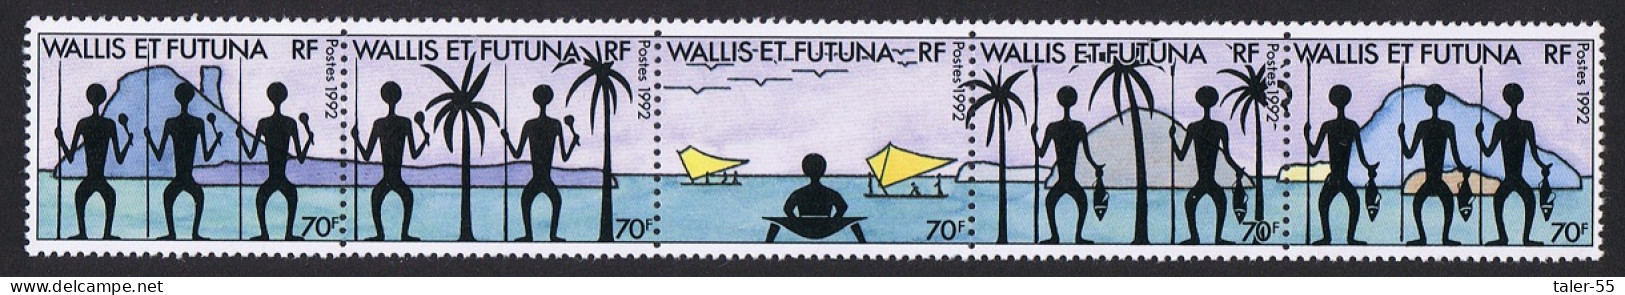 Wallis And Futuna Islands Strip Of 5v 1992 MNH SG#606-610 Sc#436 A-e - Ungebraucht